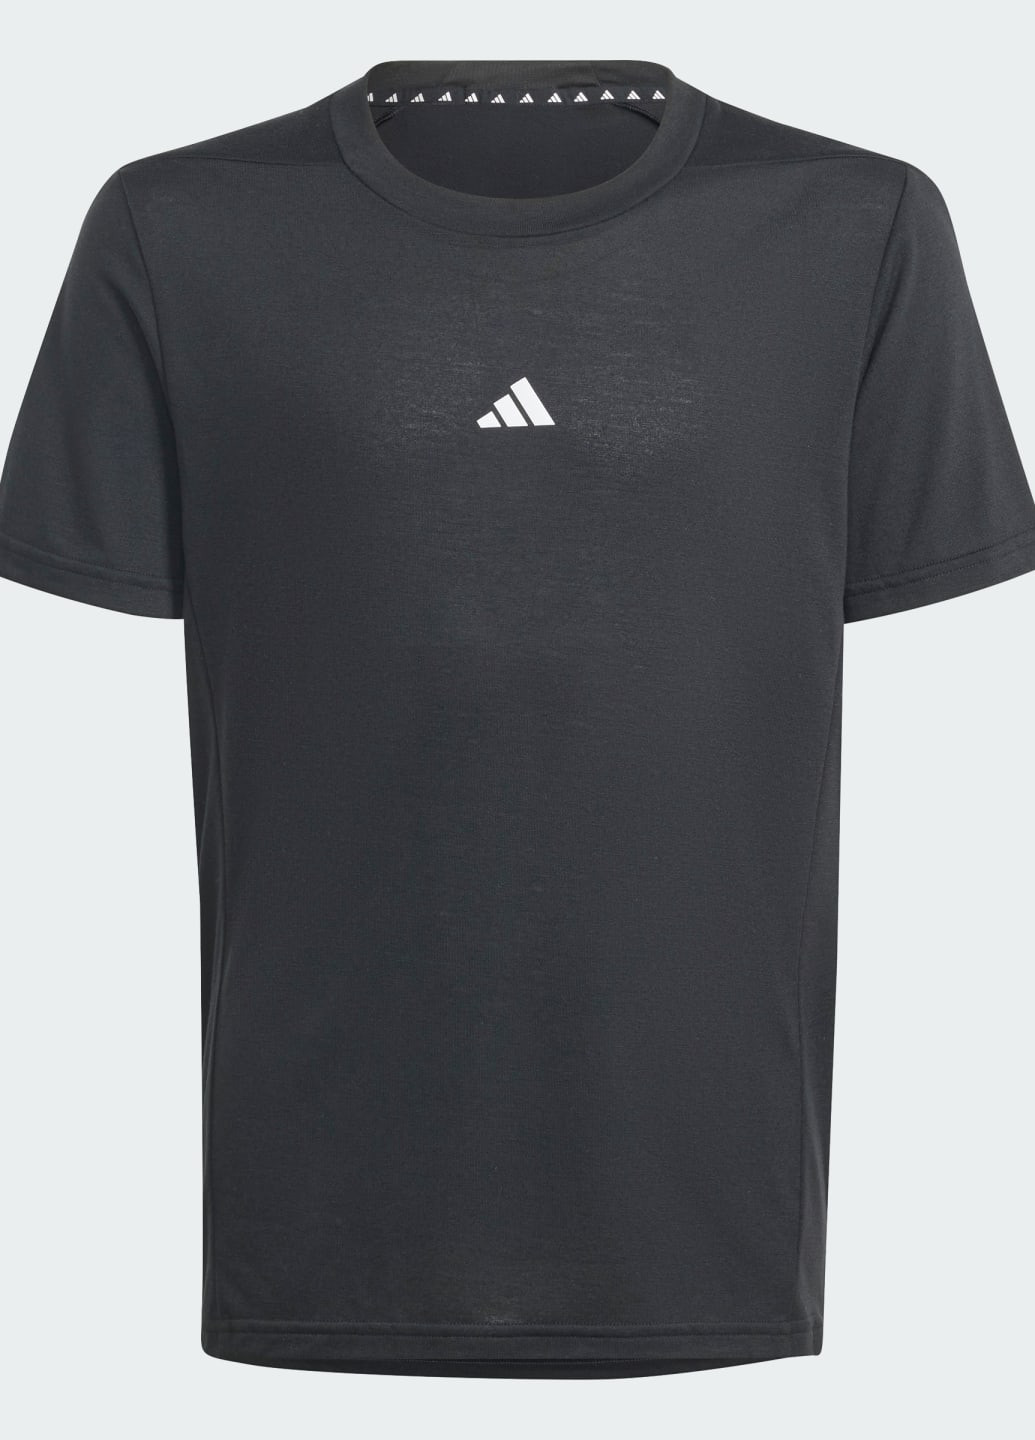 Черная демисезонная футболка training aeroready kids adidas